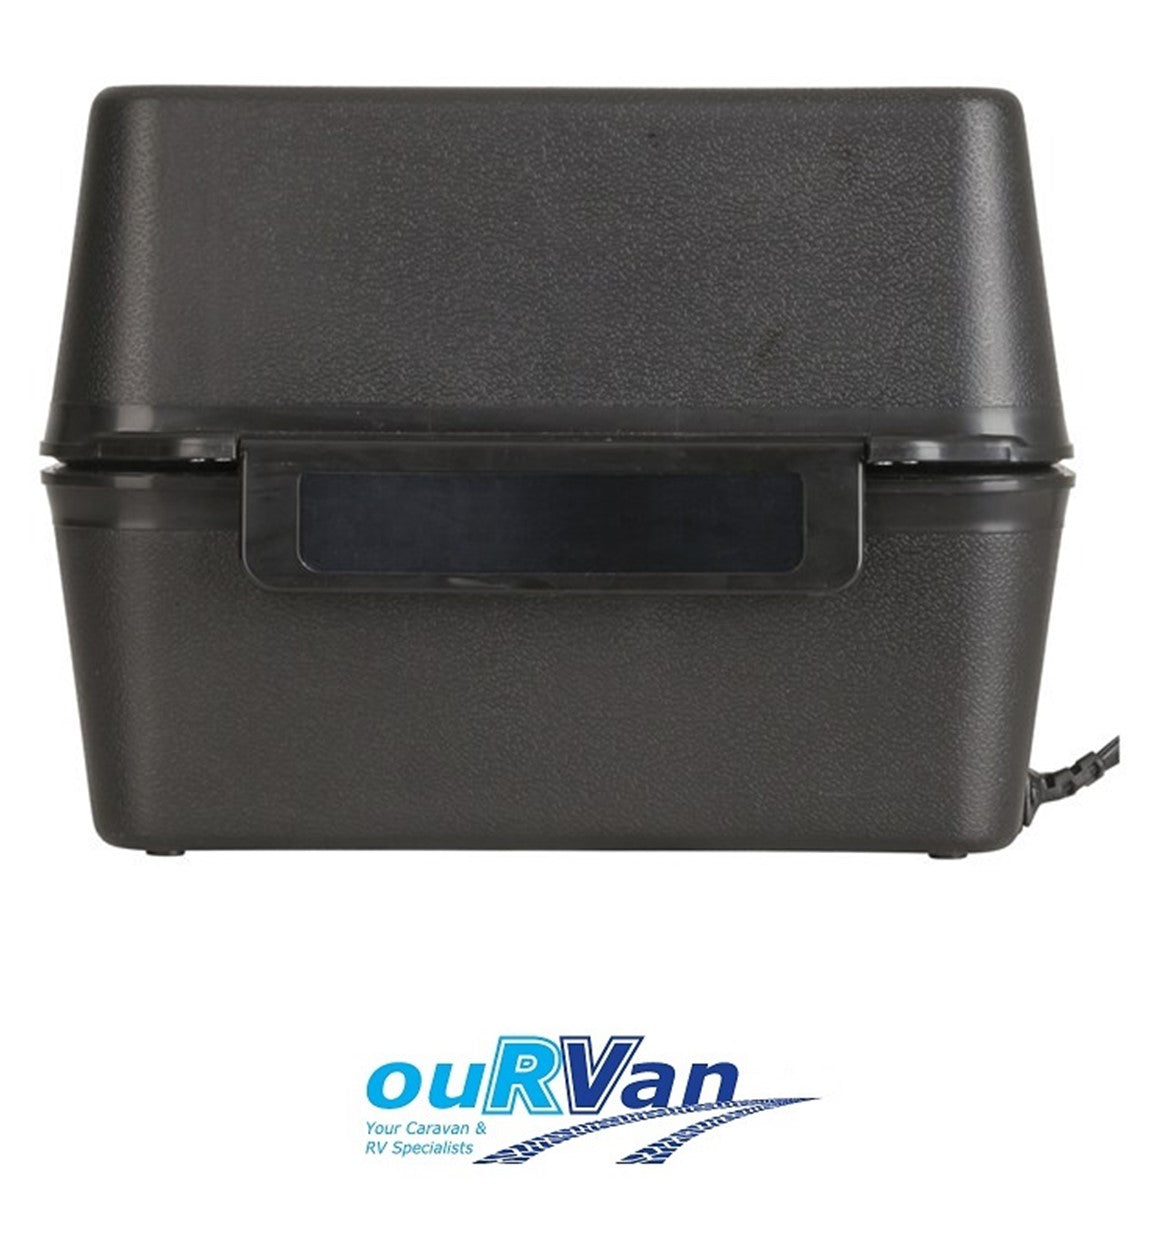 Portable Oven Stove 12 Volt Caravan Motorhome RV AU0125